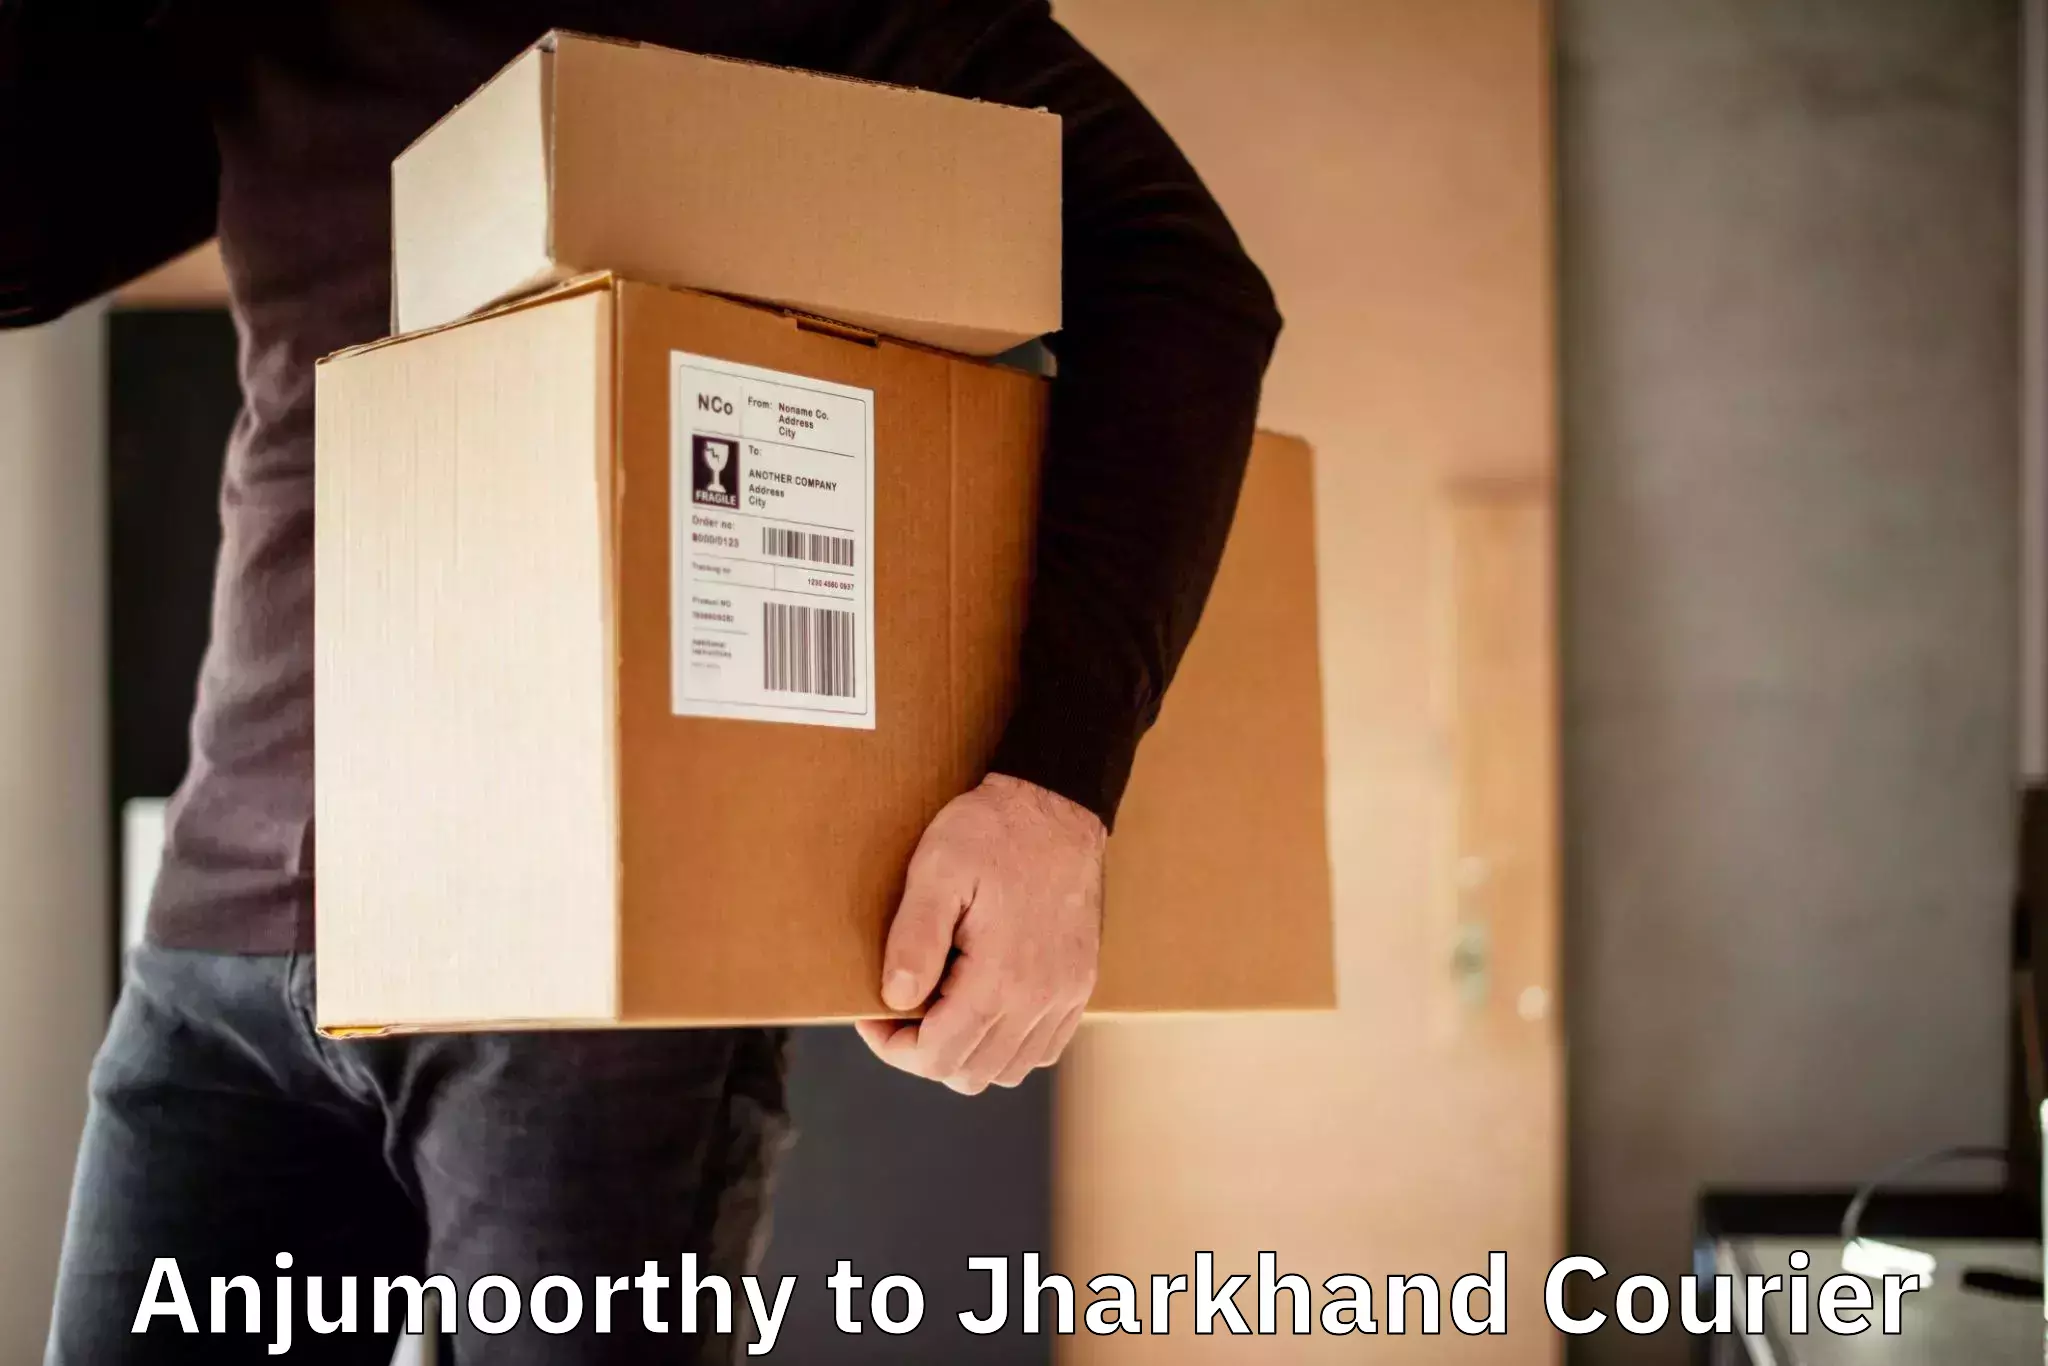 Efficient parcel tracking Anjumoorthy to Tamar